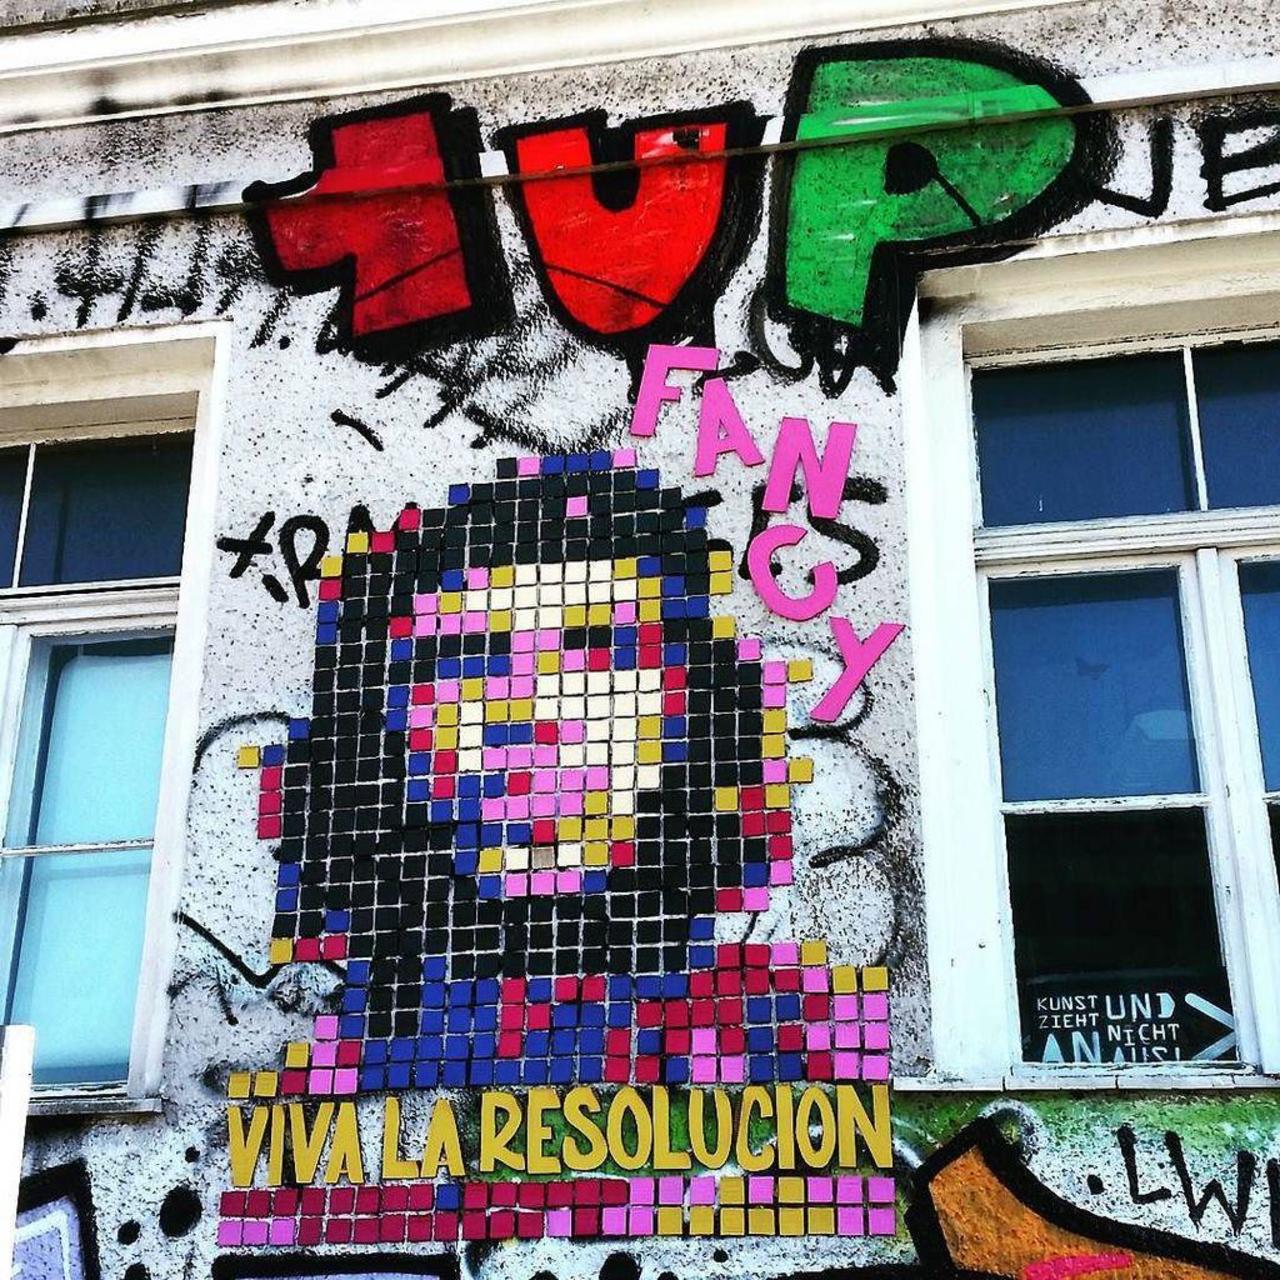 Viva la resolucion! 
#Graffiti #instadaily #instaphoto #streetart #streetartberlin #Berlin #Germany #streetartphoto… http://t.co/6sCU9WJ0kl